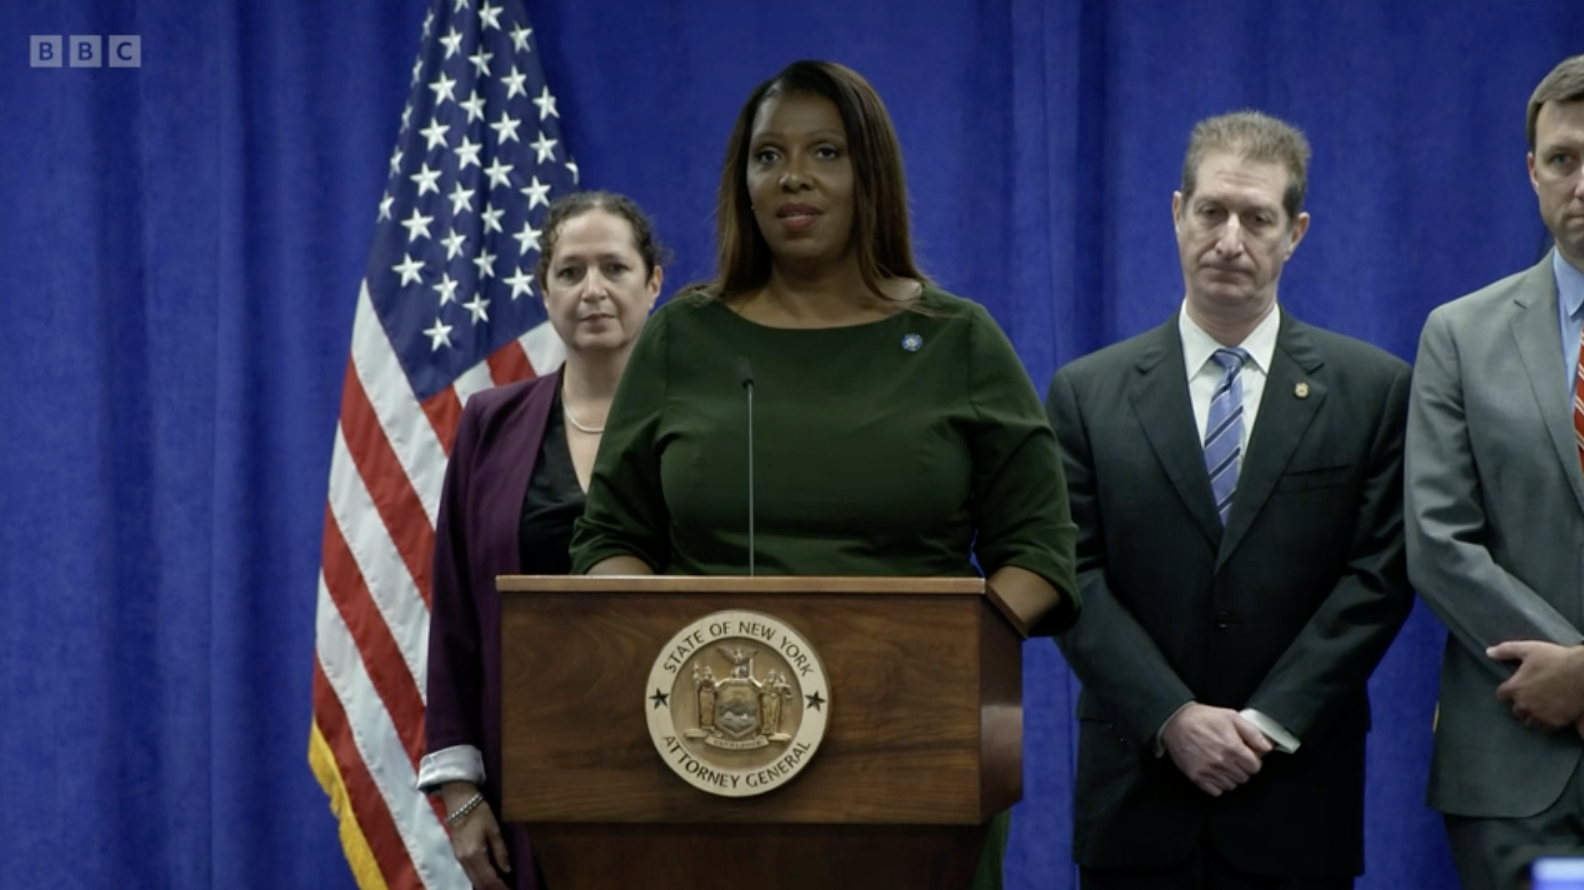 New York attorney general Letitia James (center). Image: BBC